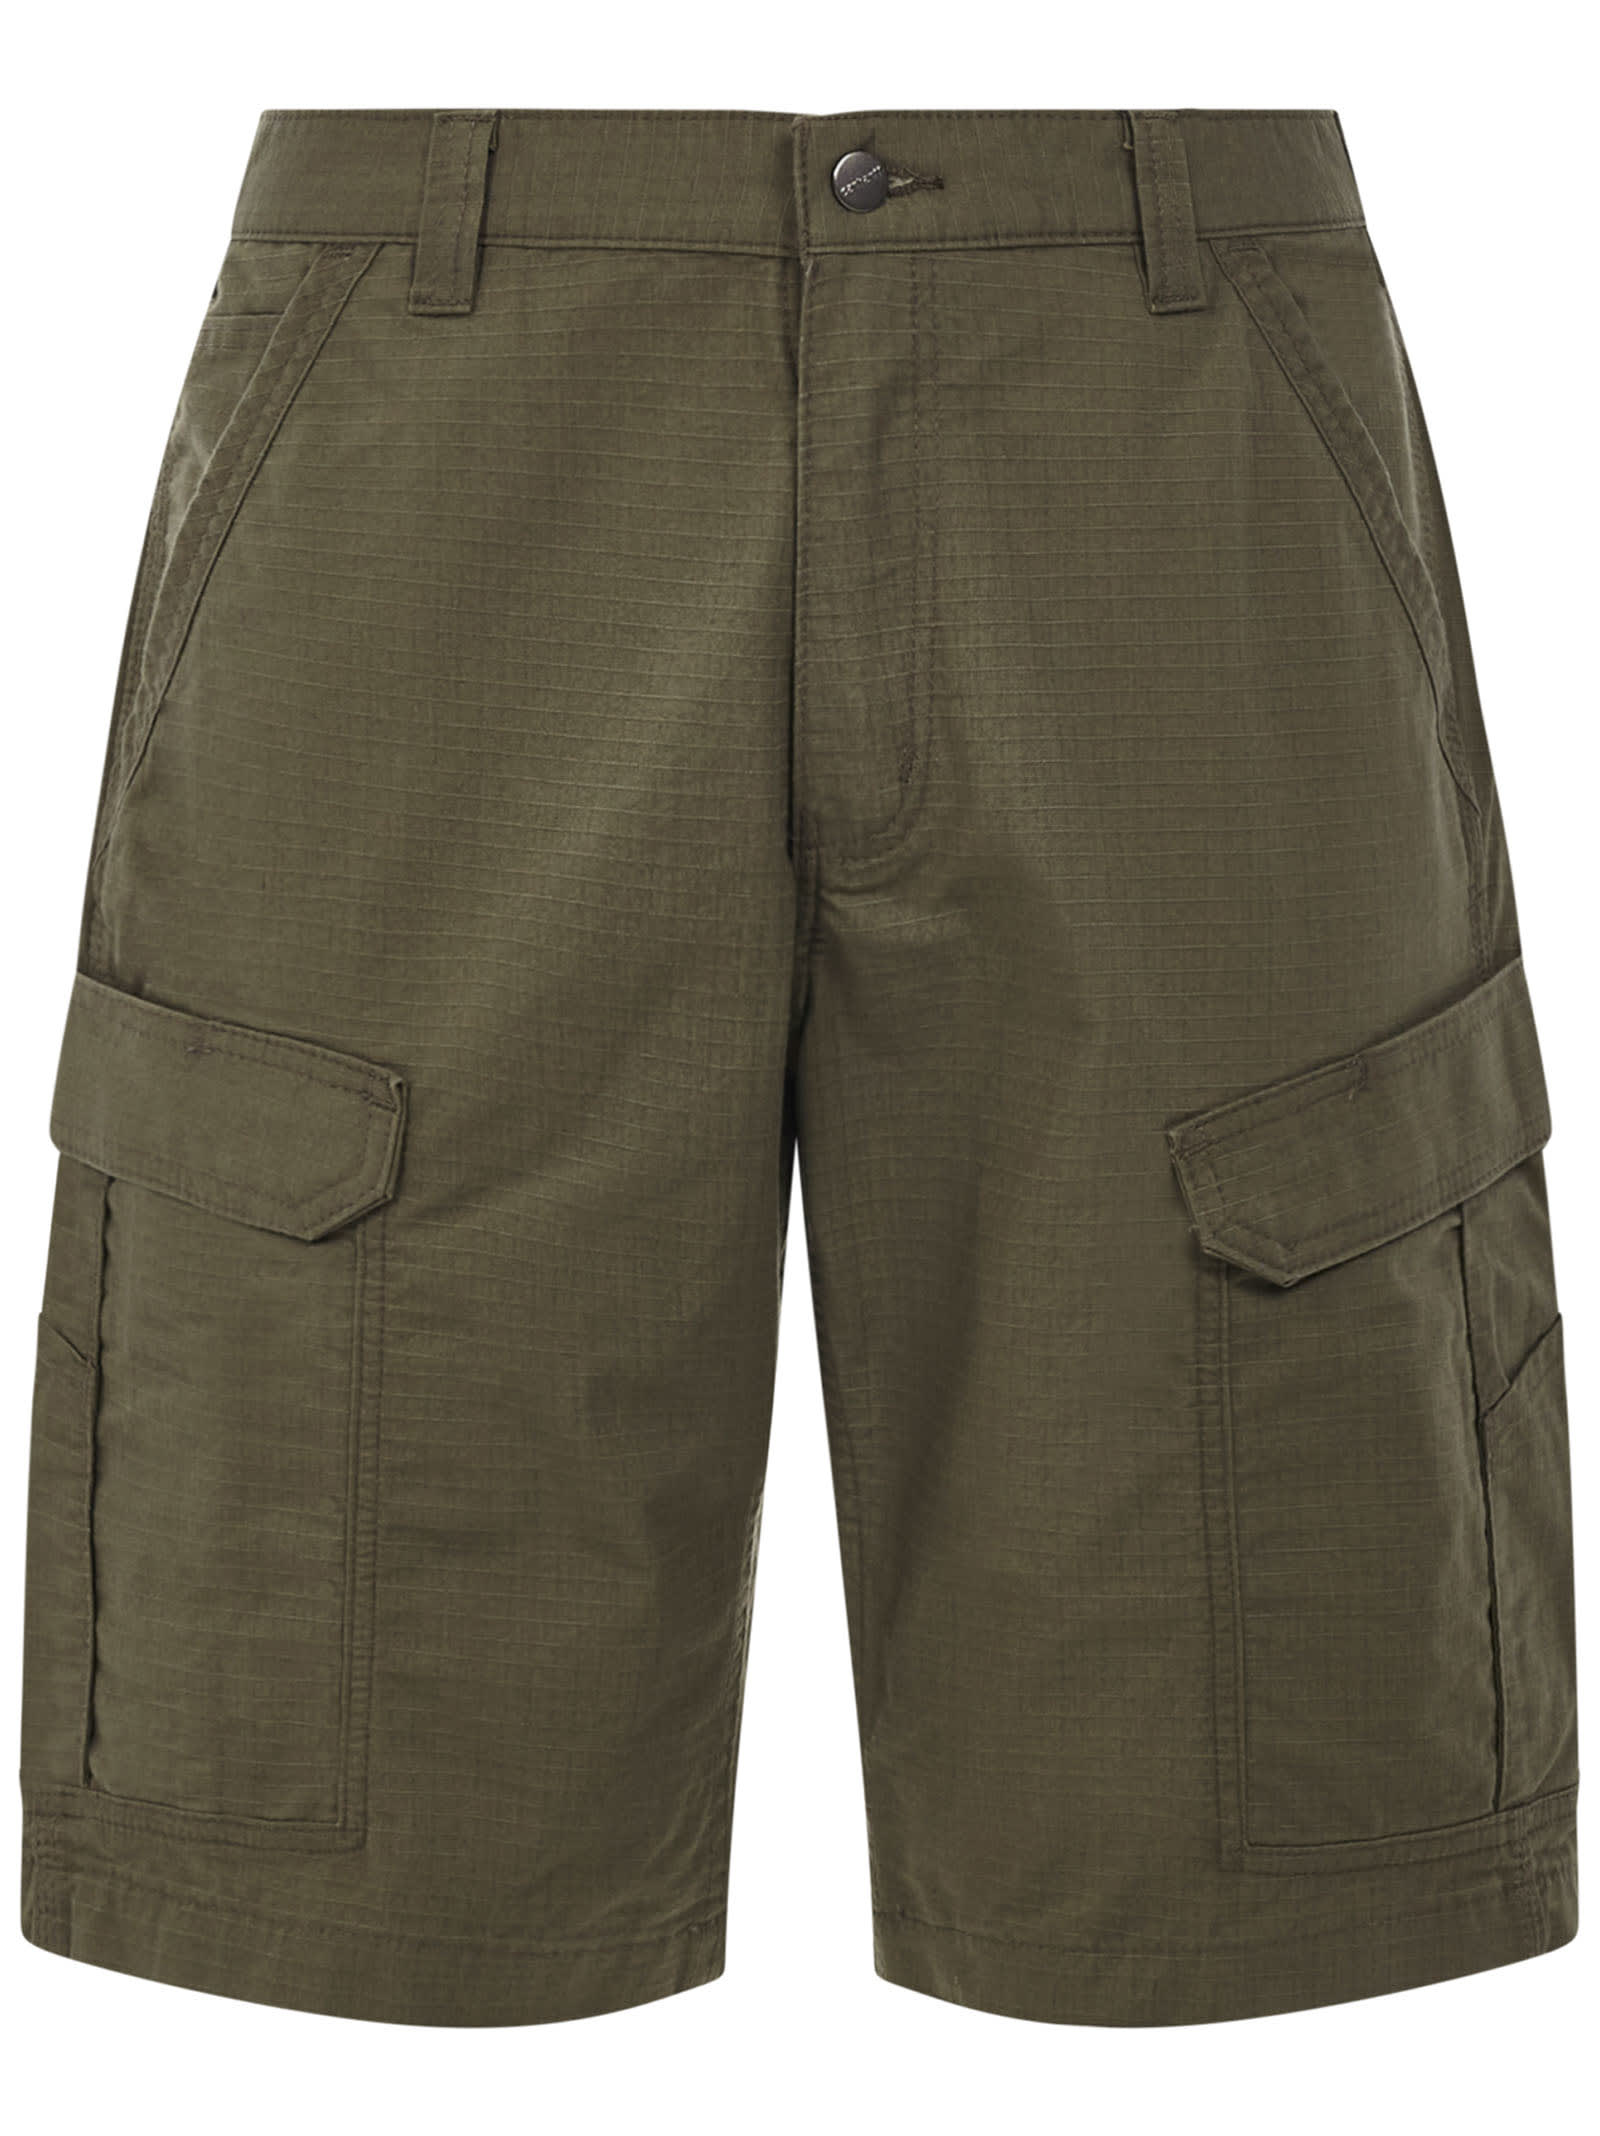 Carhartt Force Broxton Shorts